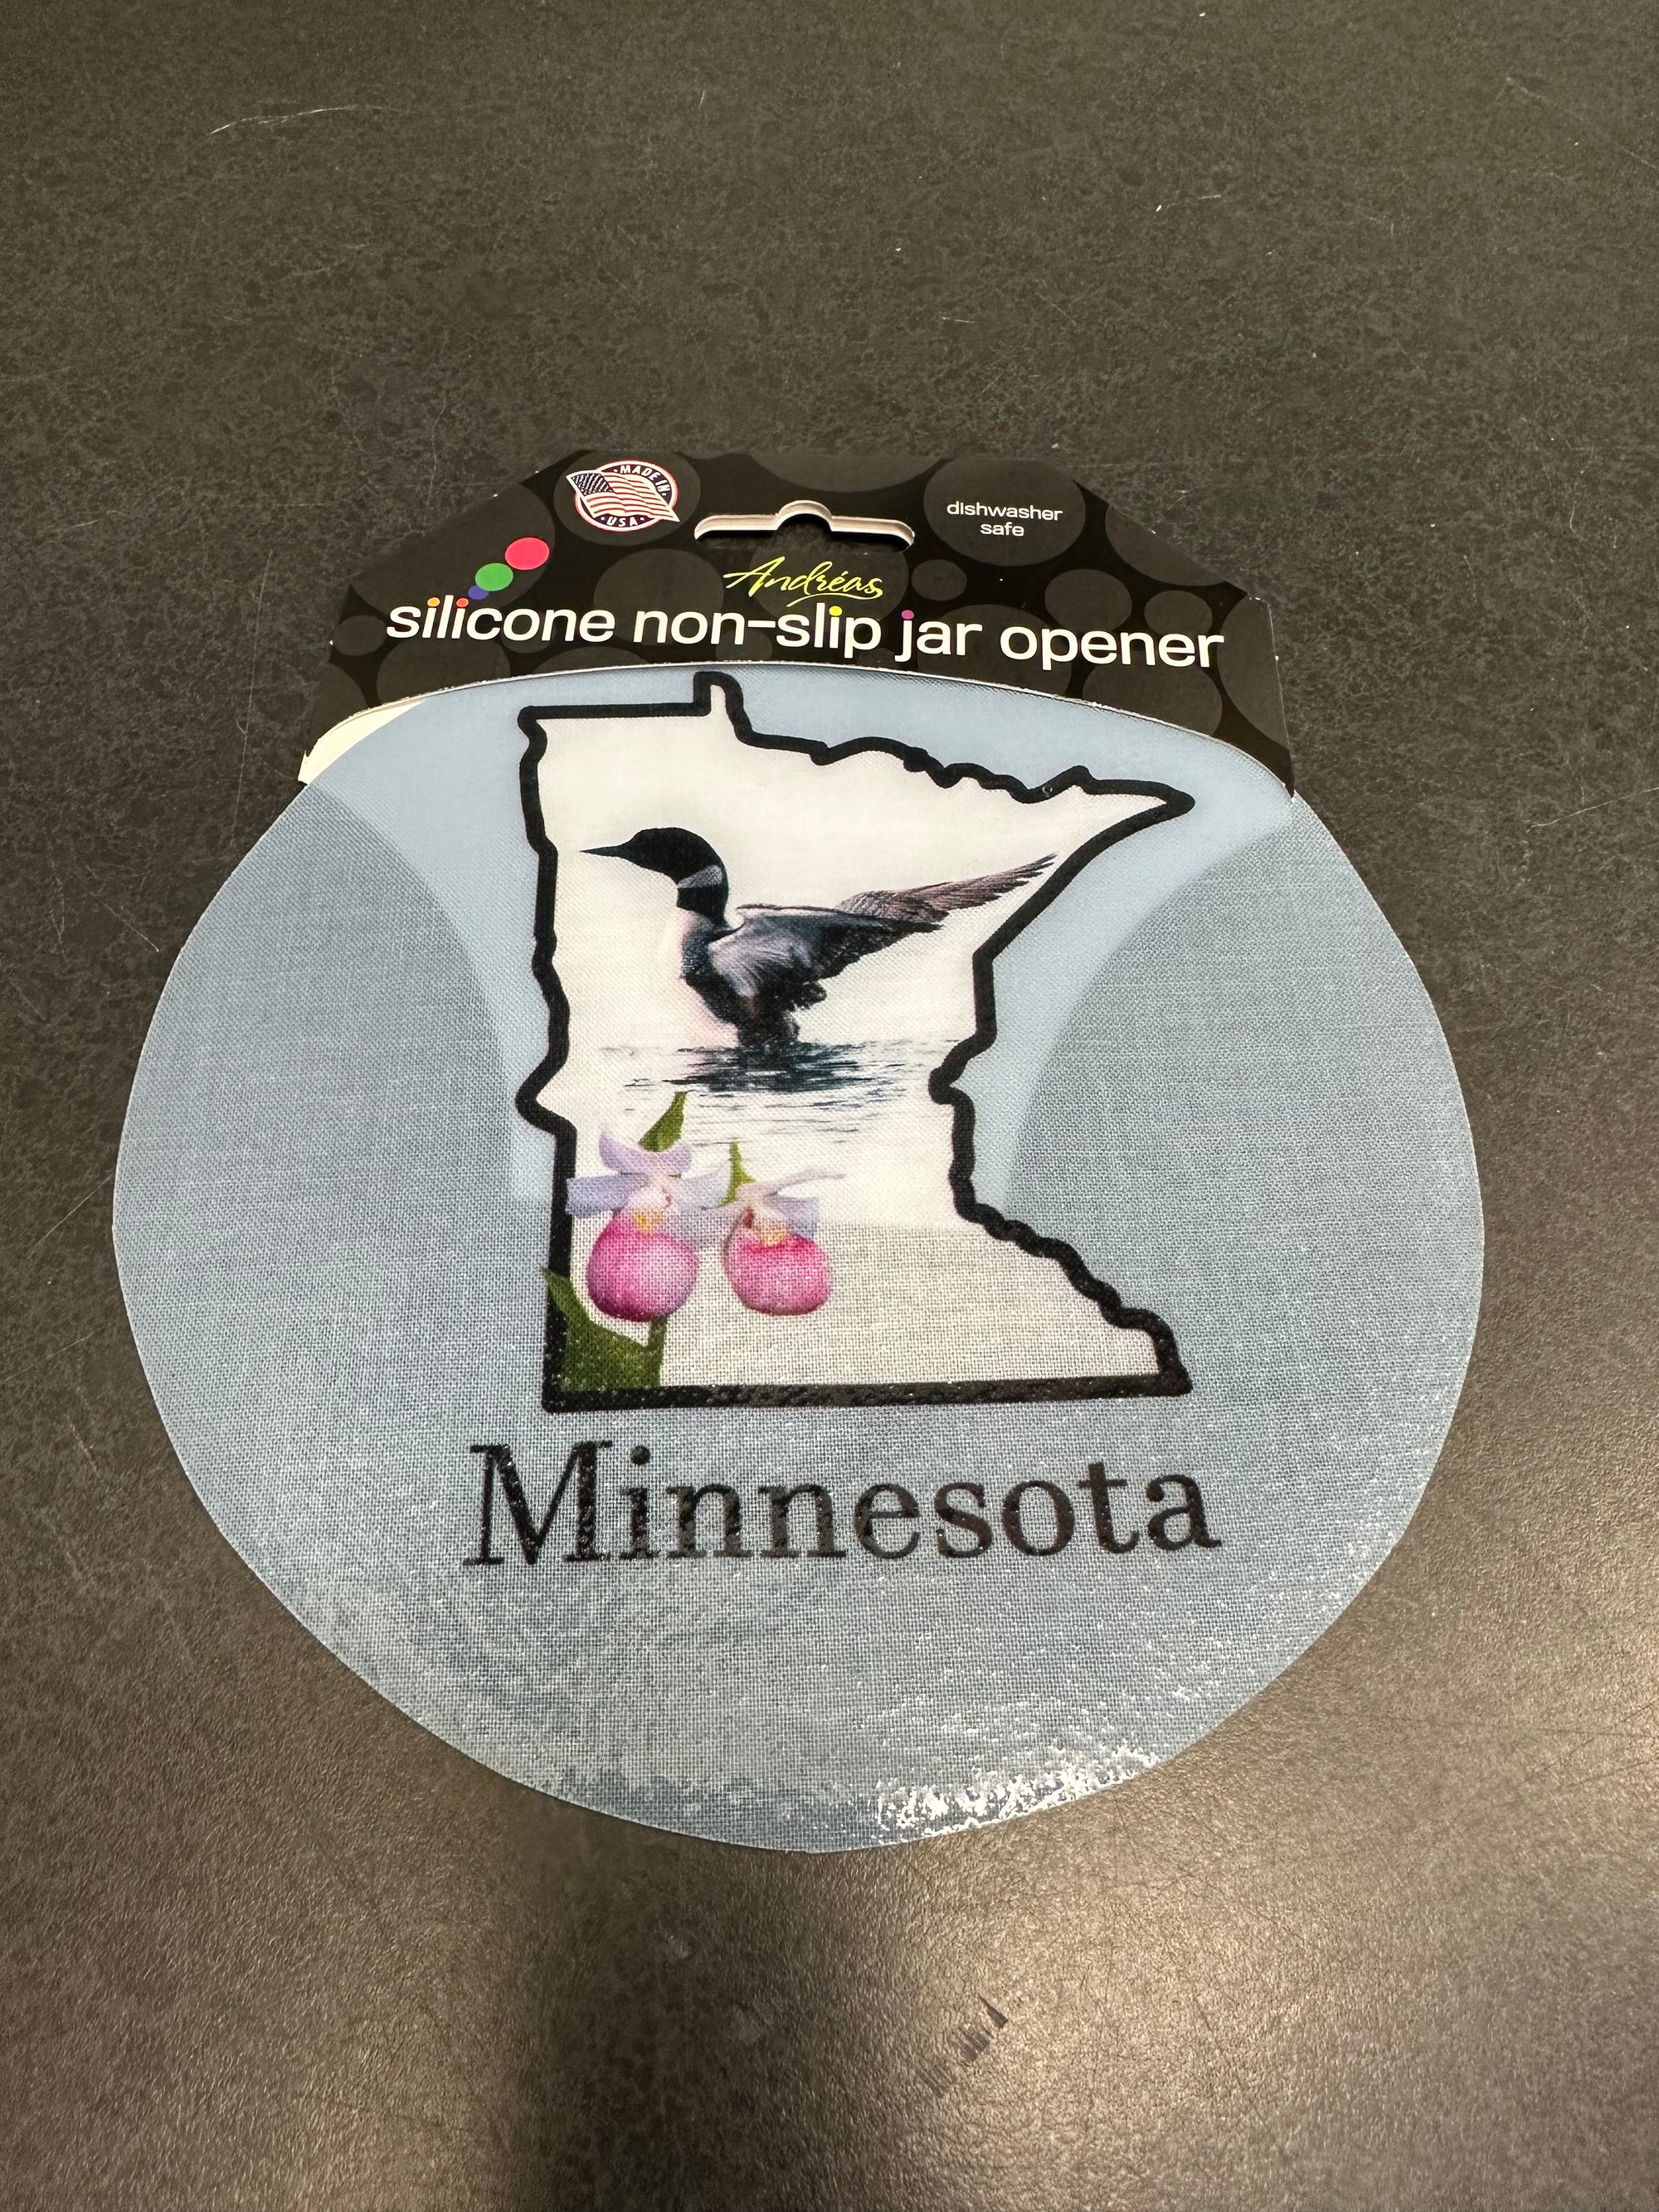 State of Minnesota Jar Opener